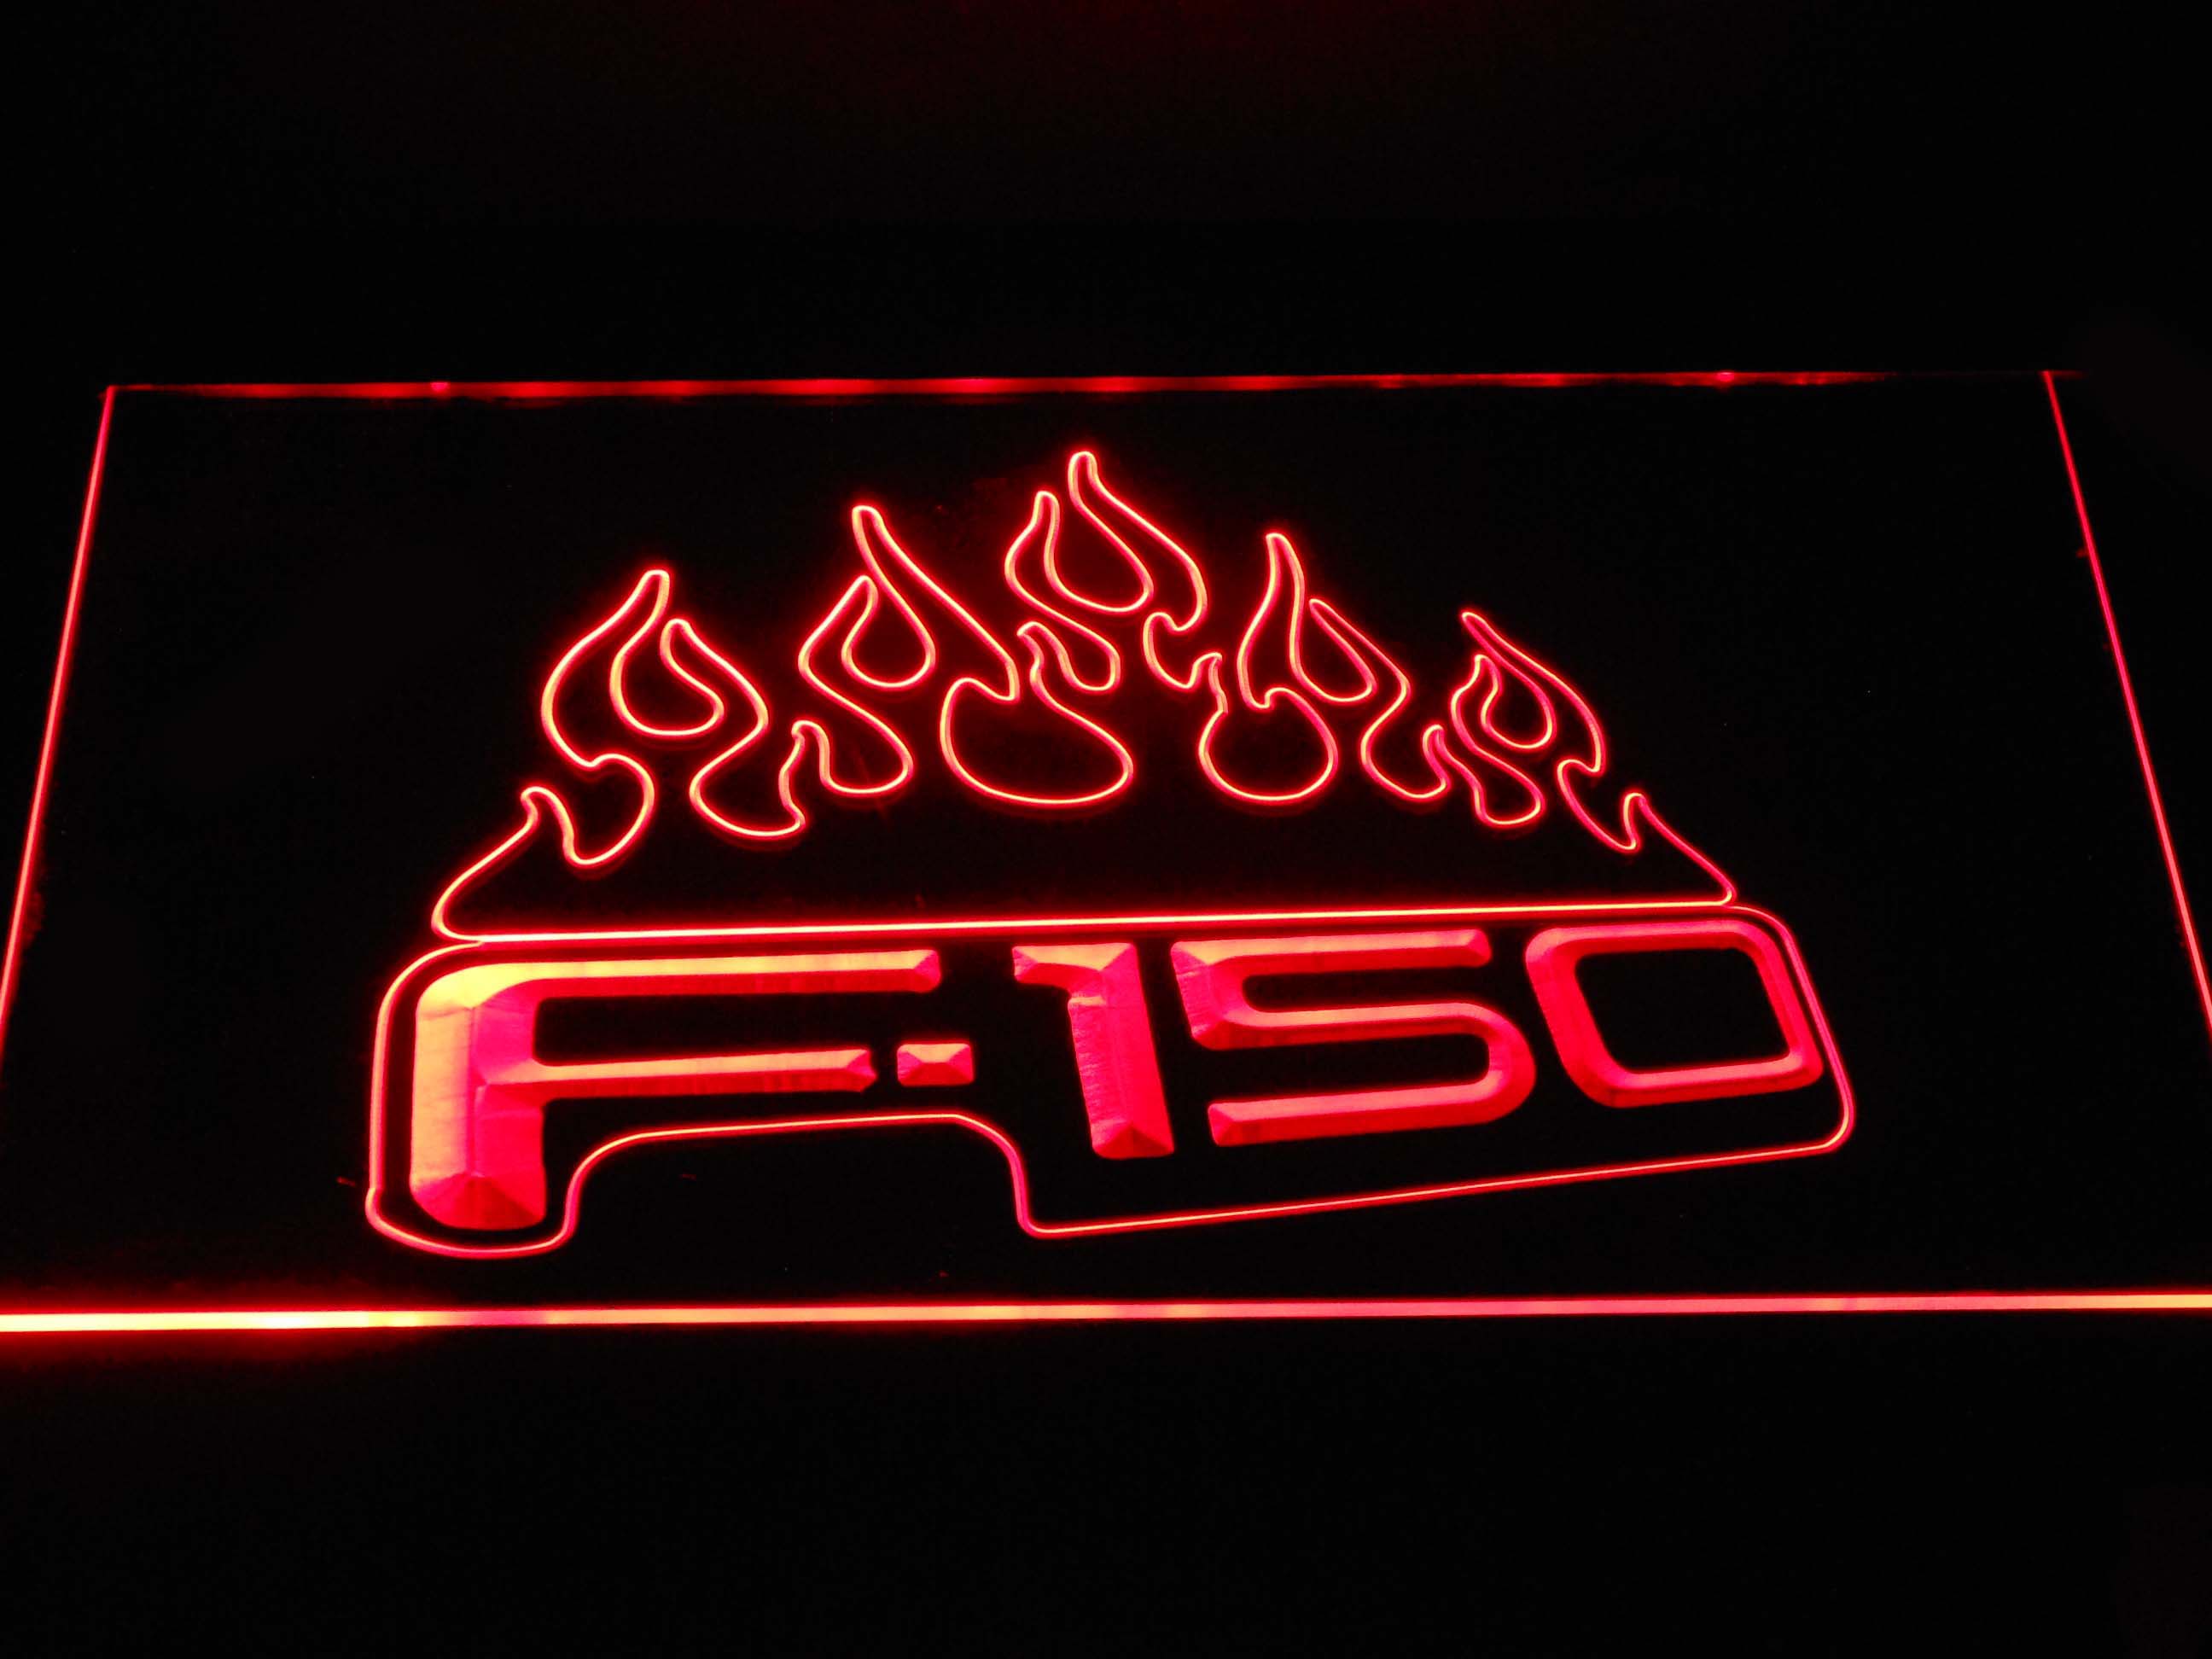 Ford Trucks Dealership LED sign wall lamp light opti neon Garage Dad's shop F150 